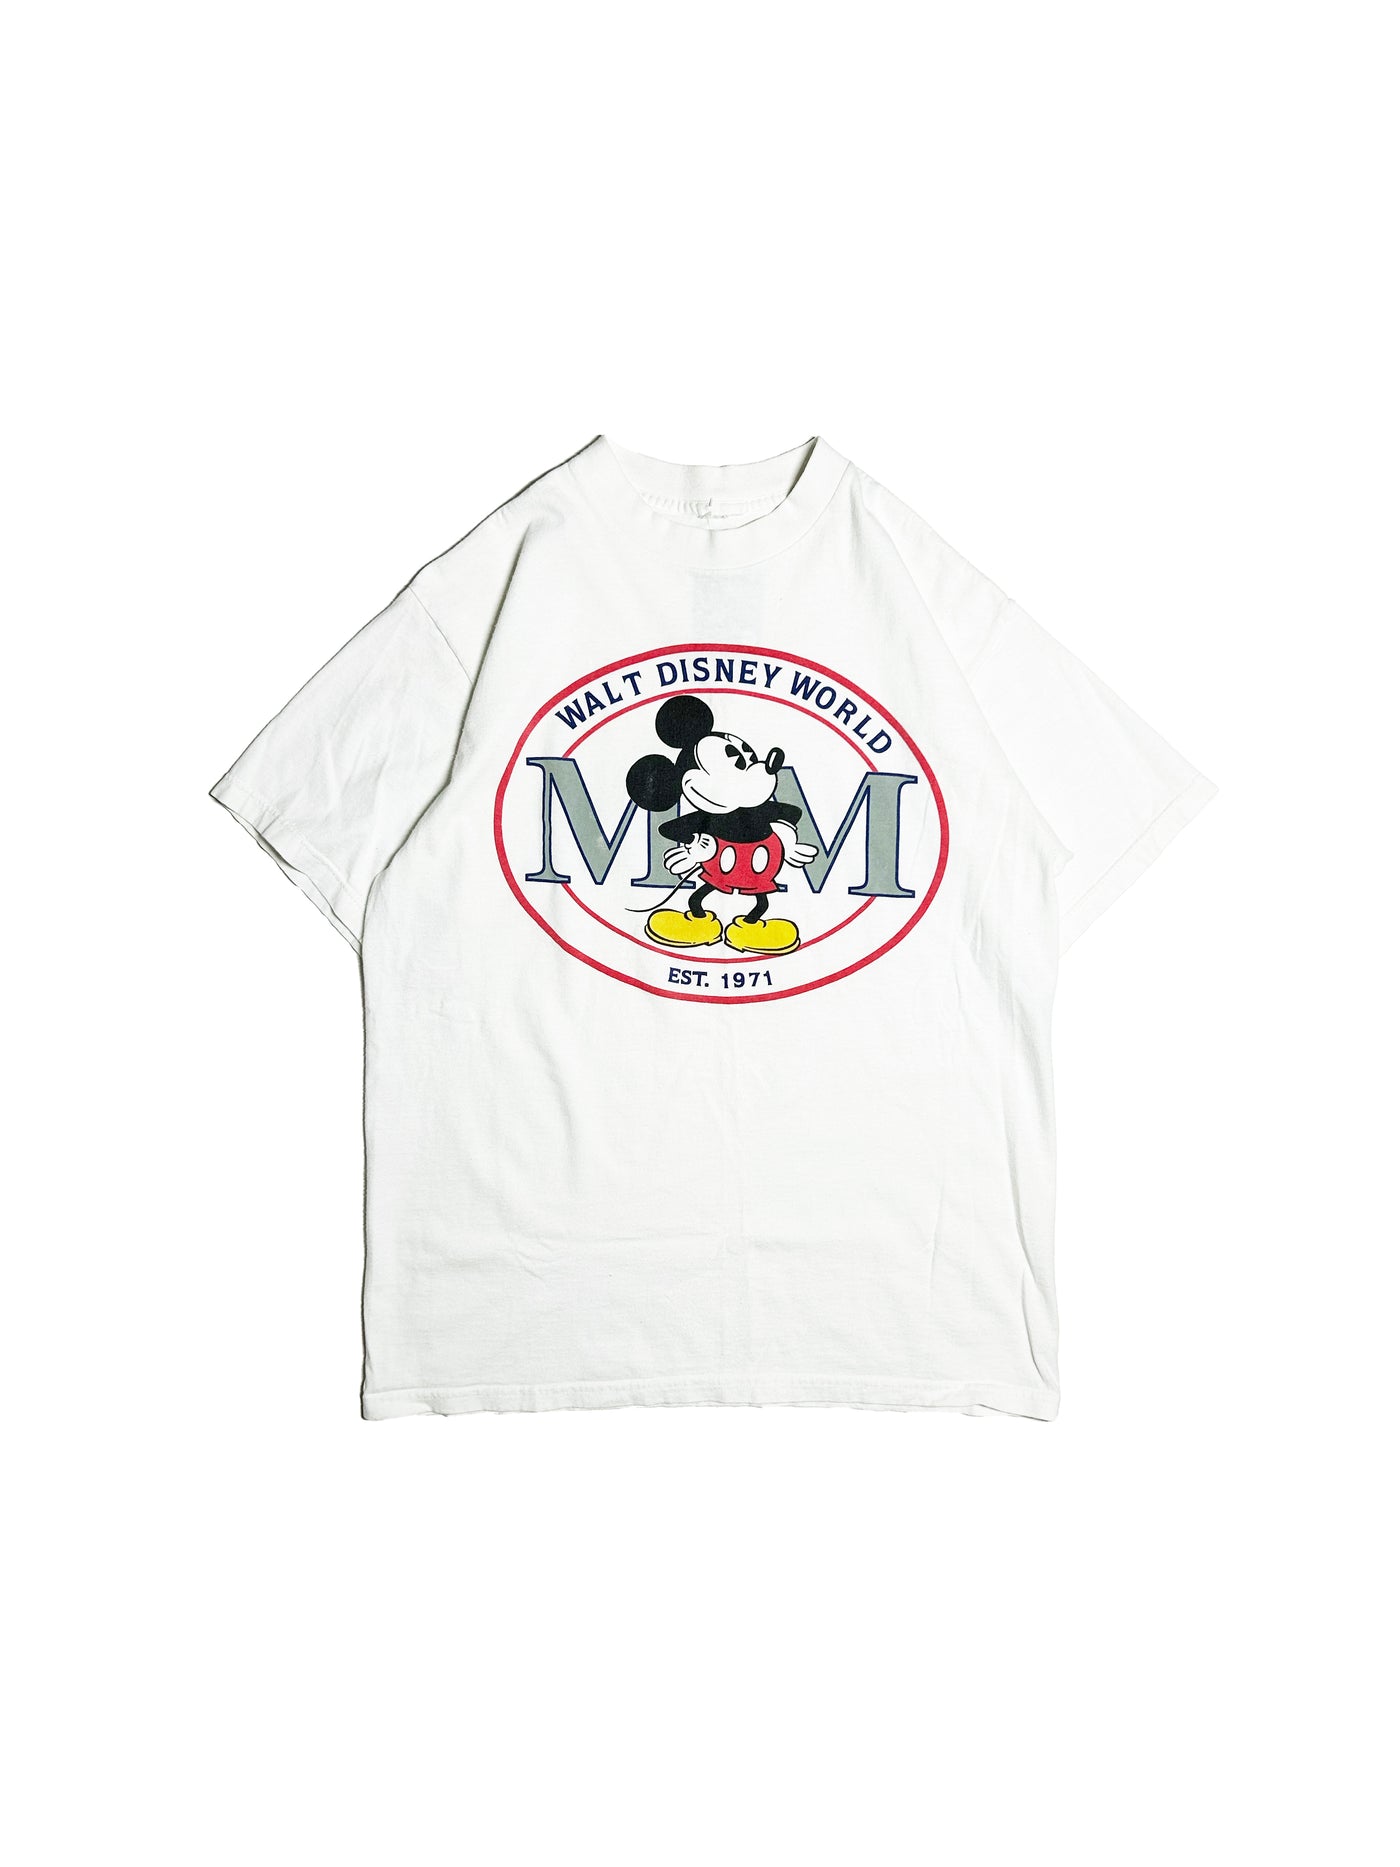 Vintage 90s Walt Disney World T-Shirt